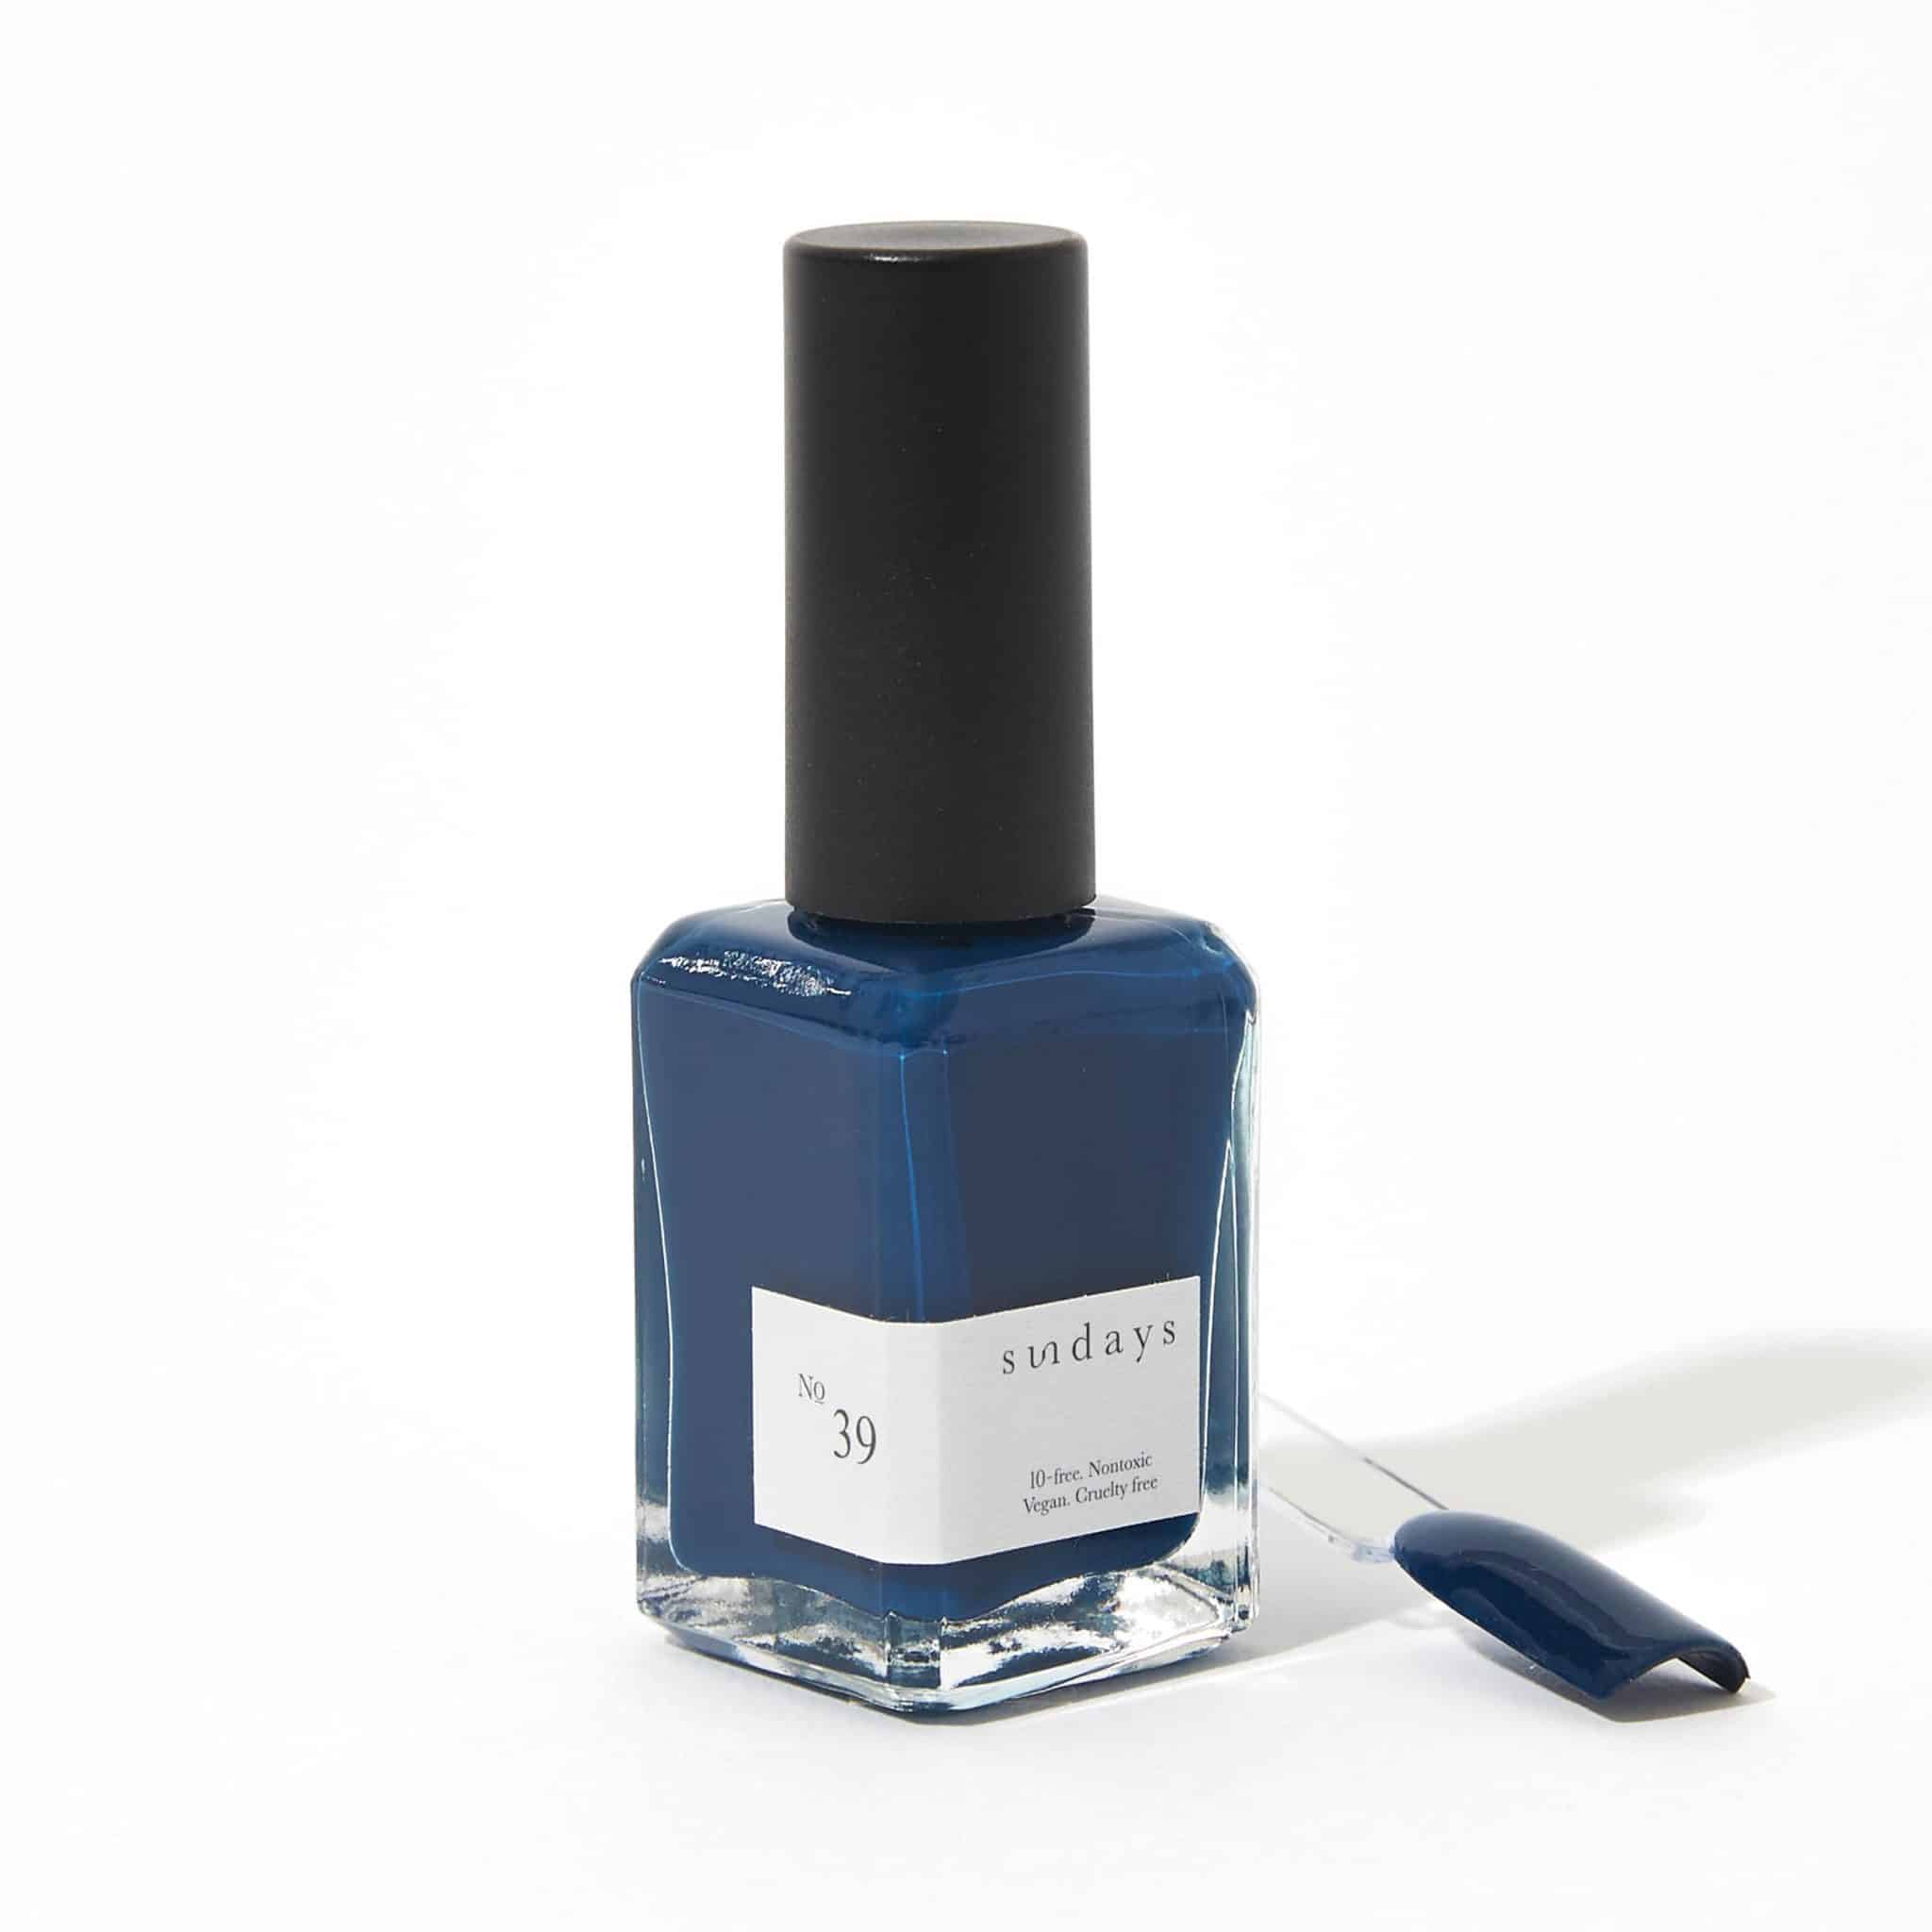 Non-toxic nail polish in indigo